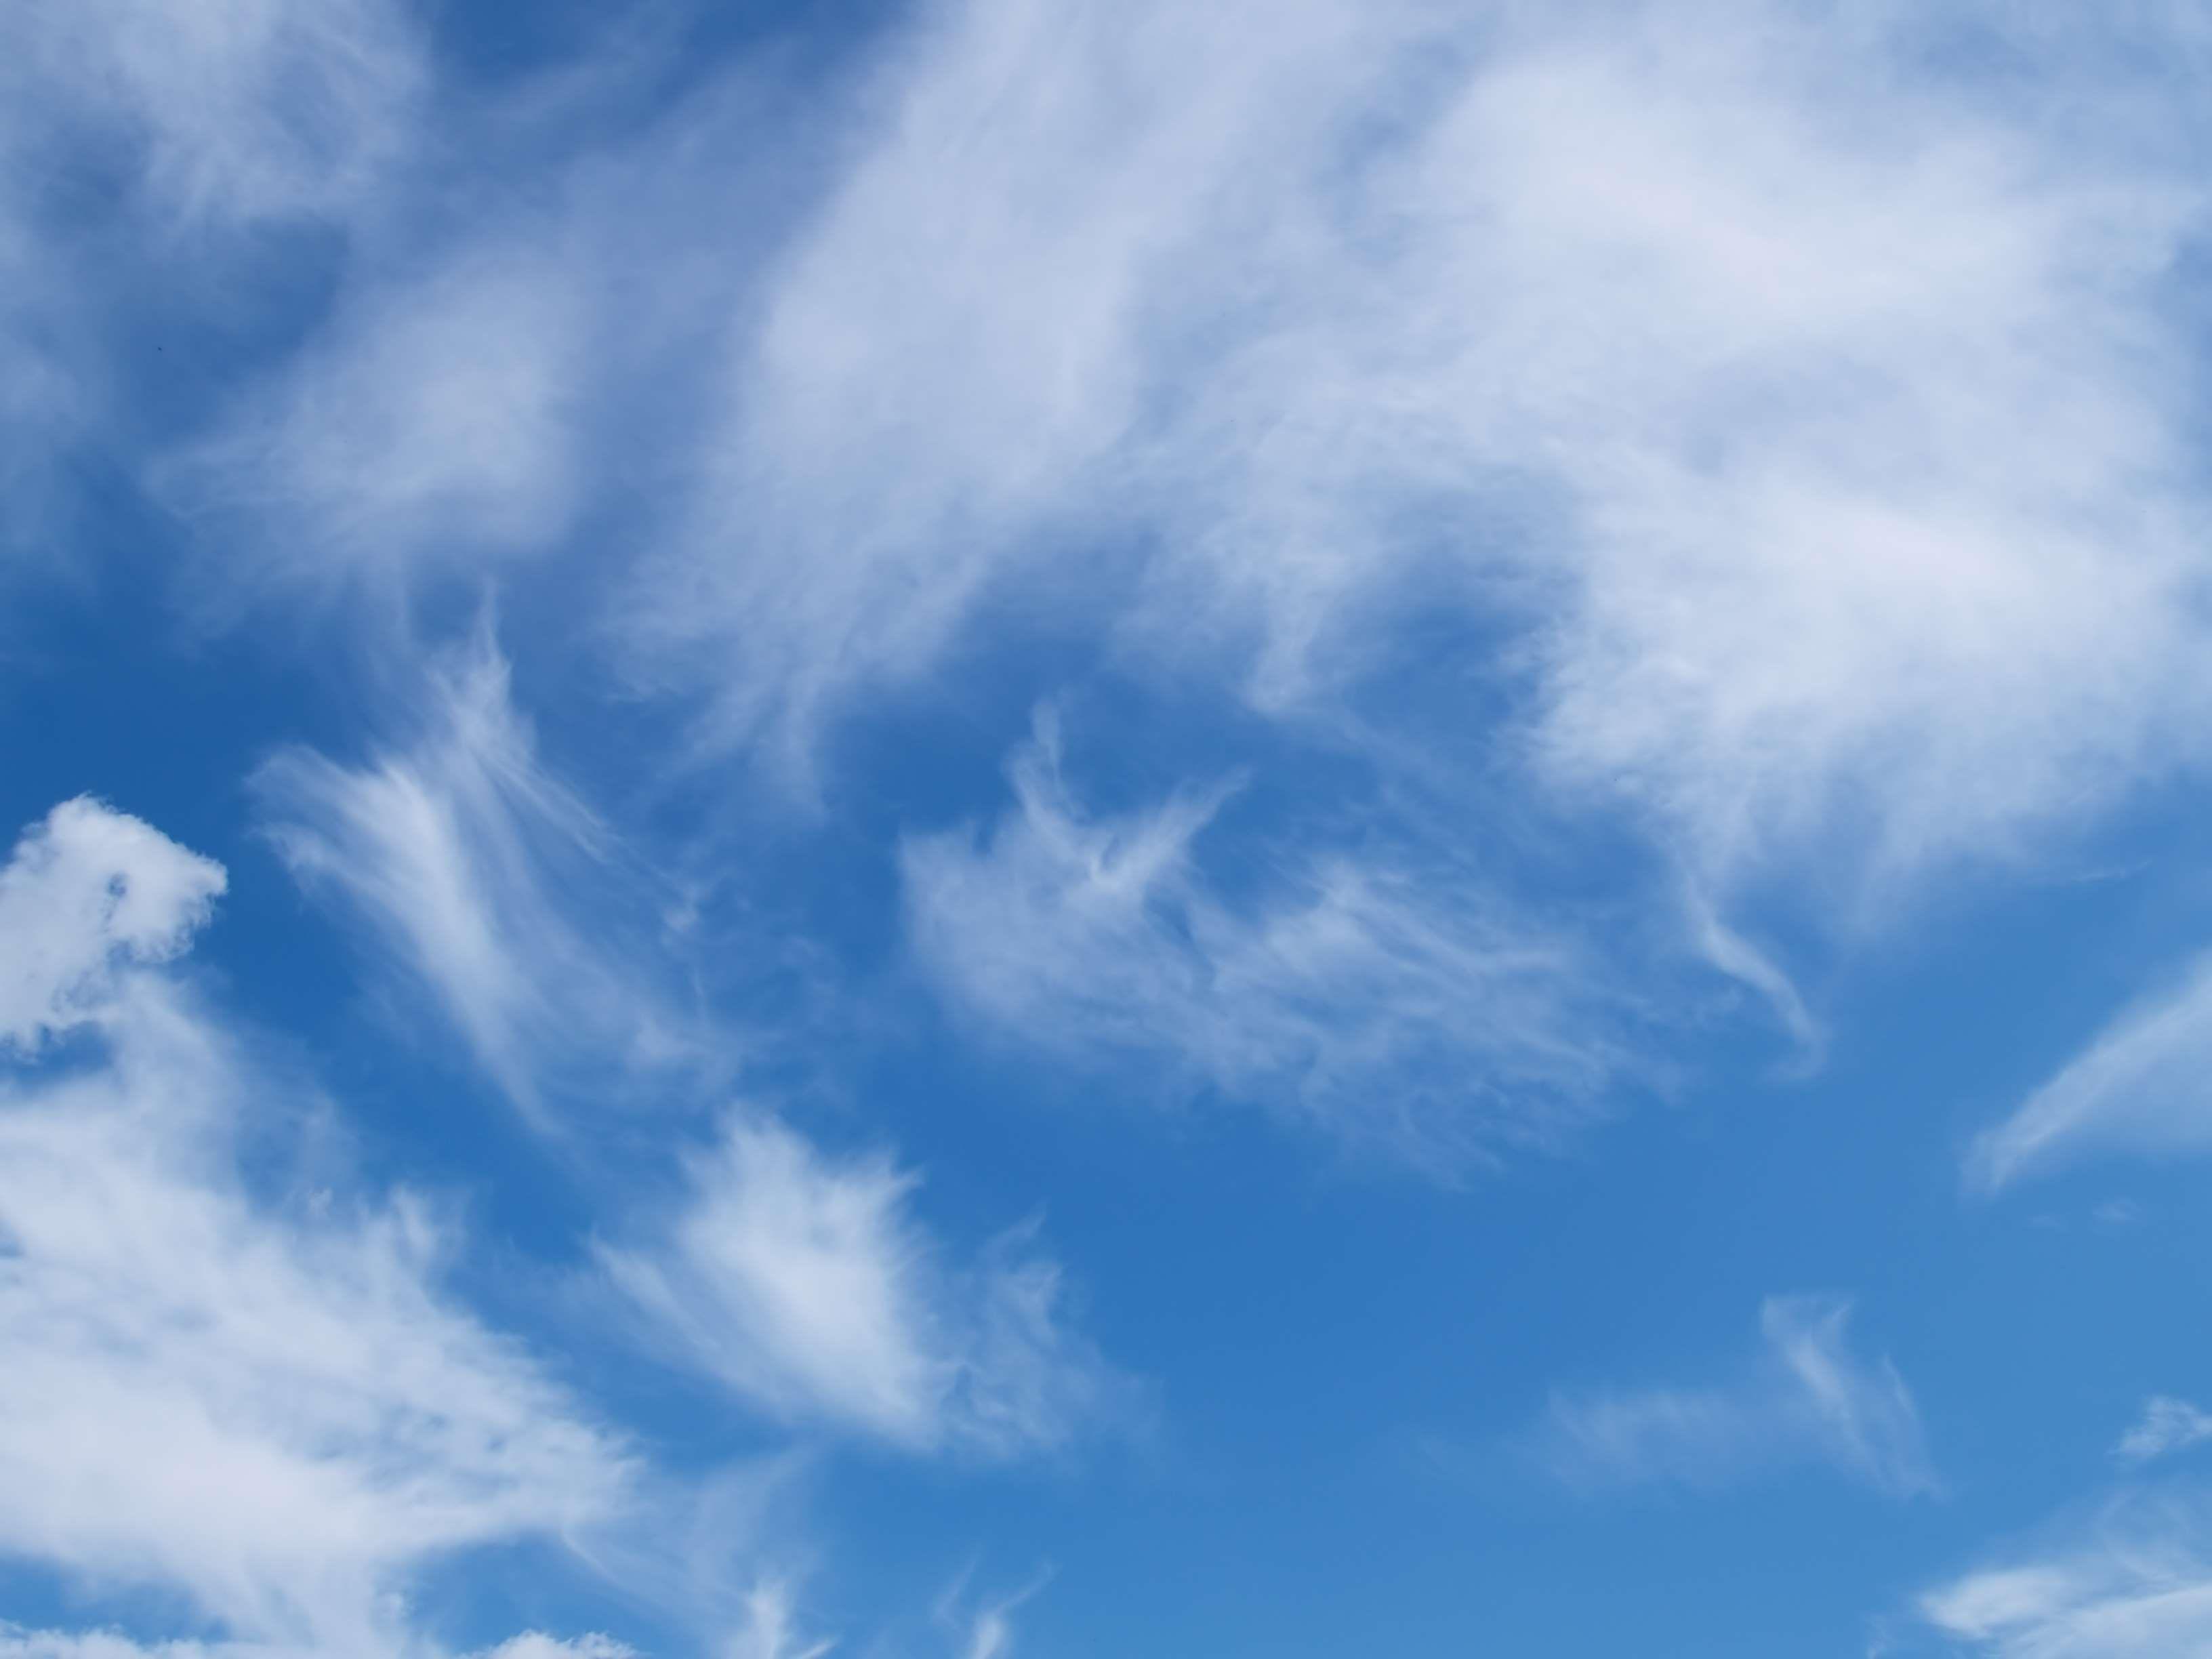 Blue Aesthetic Cloud Wallpapers - Top Free Blue Aesthetic Cloud